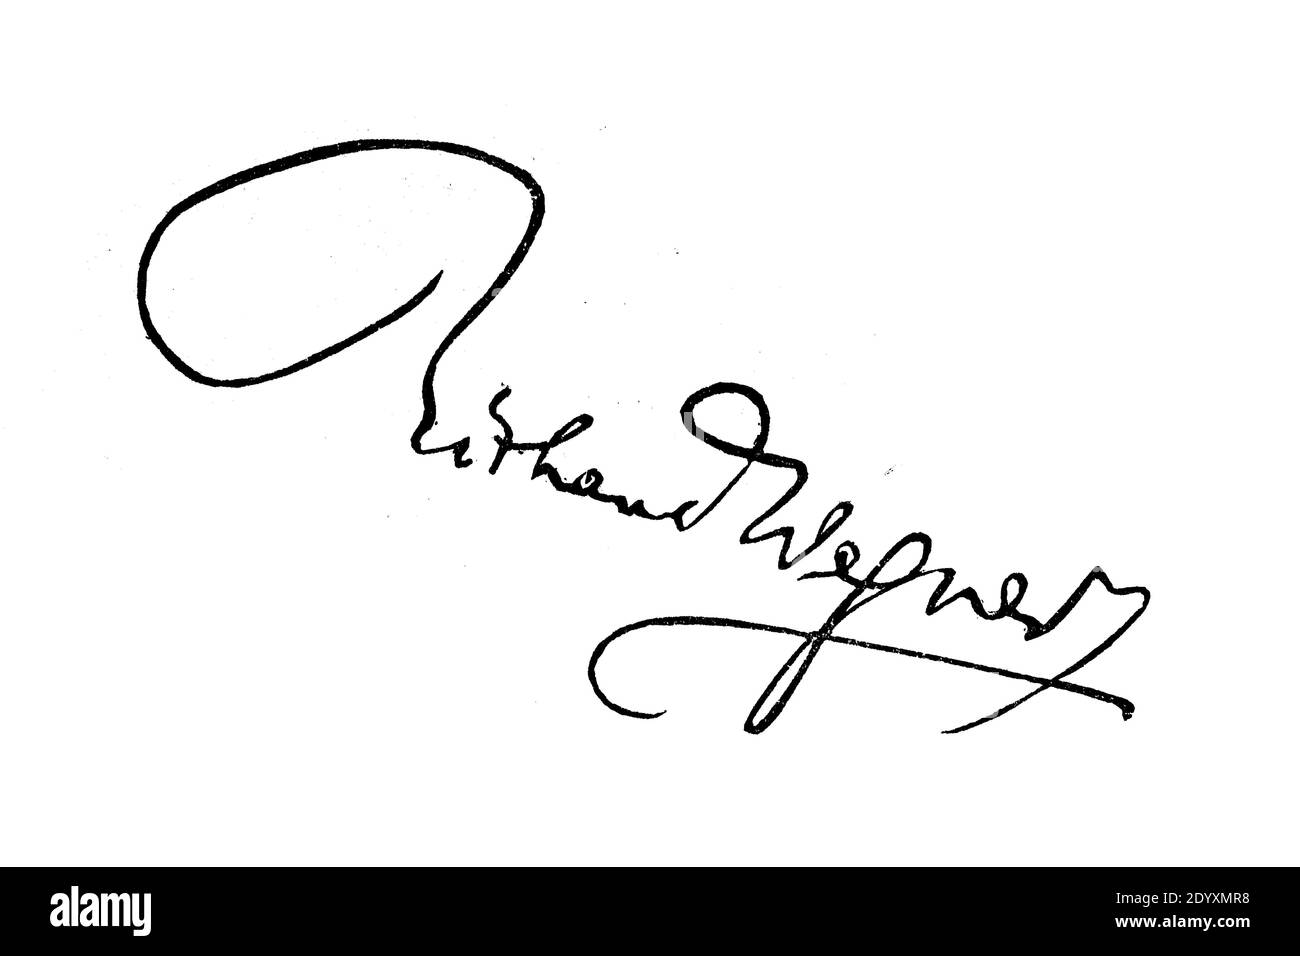 Signature, handwriting of Richard Wagner  /  Unterschrift, Handschrift von Richard Wagner, Historisch, historical, digital improved reproduction of an original from the 19th century / digitale Reproduktion einer Originalvorlage aus dem 19. Jahrhundert, Stock Photo